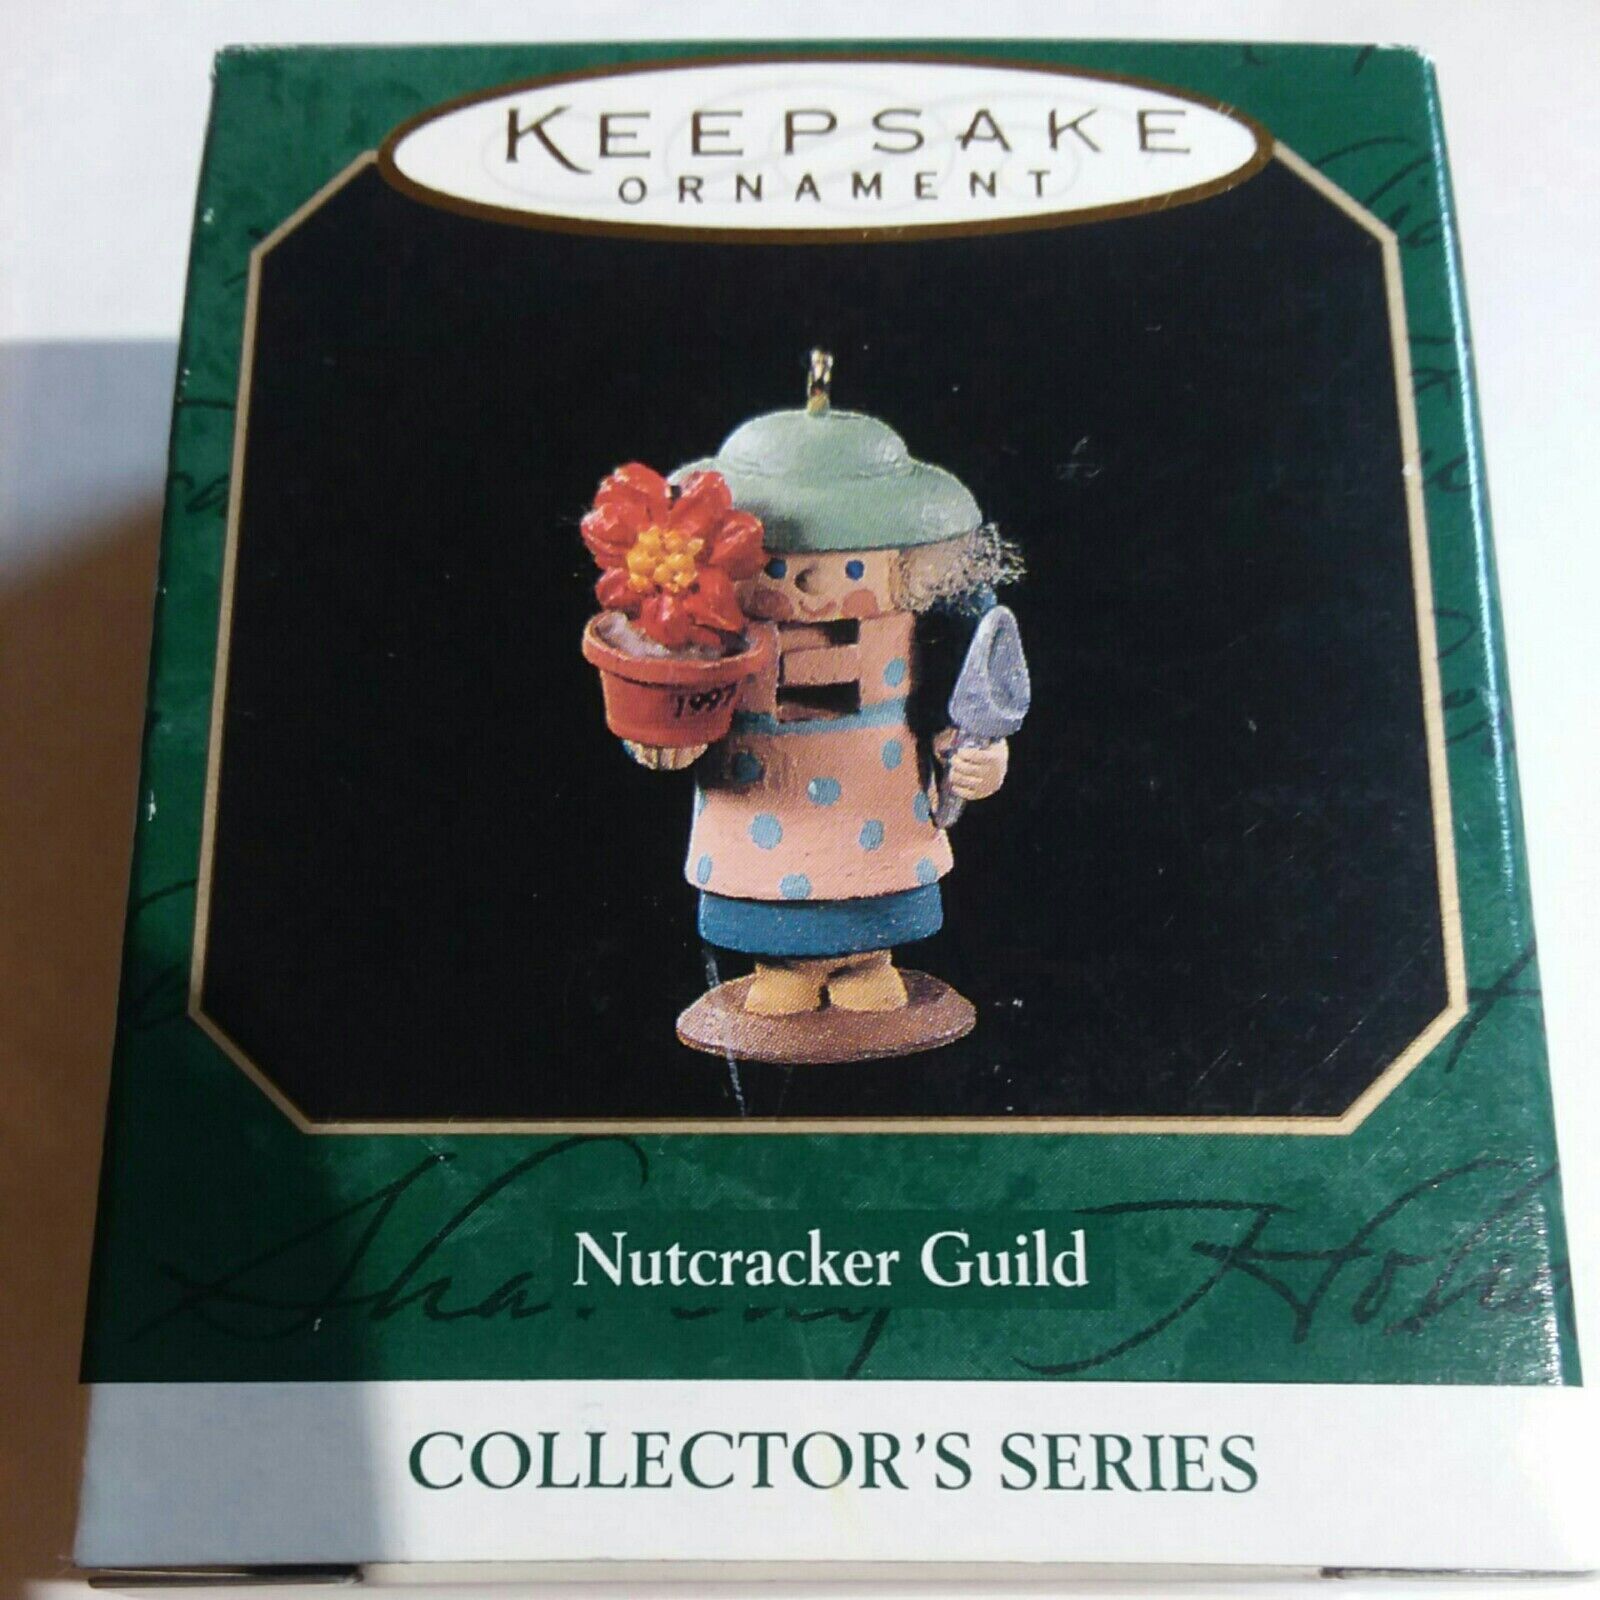 Nutcracker Guild`1997`Miniature-4Th N Nutcracker Guild Series,Hallmark Ornament